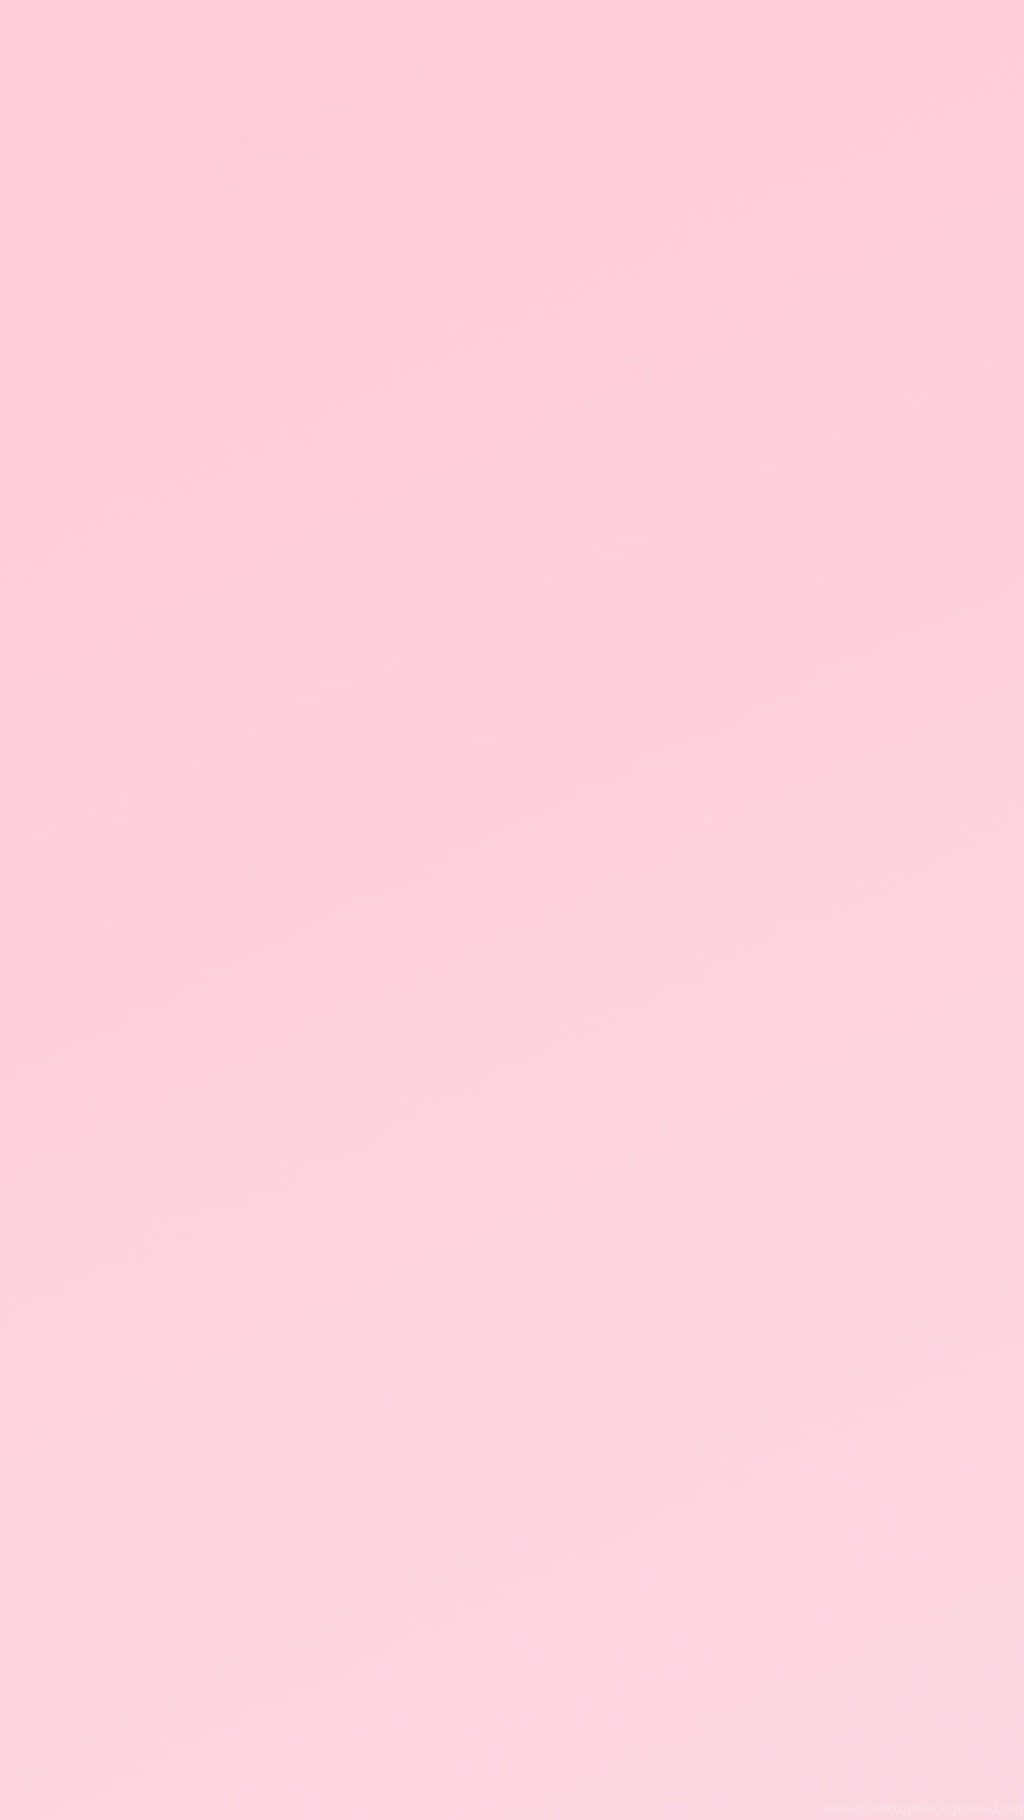 A Plain, Crisp Light Pink Background